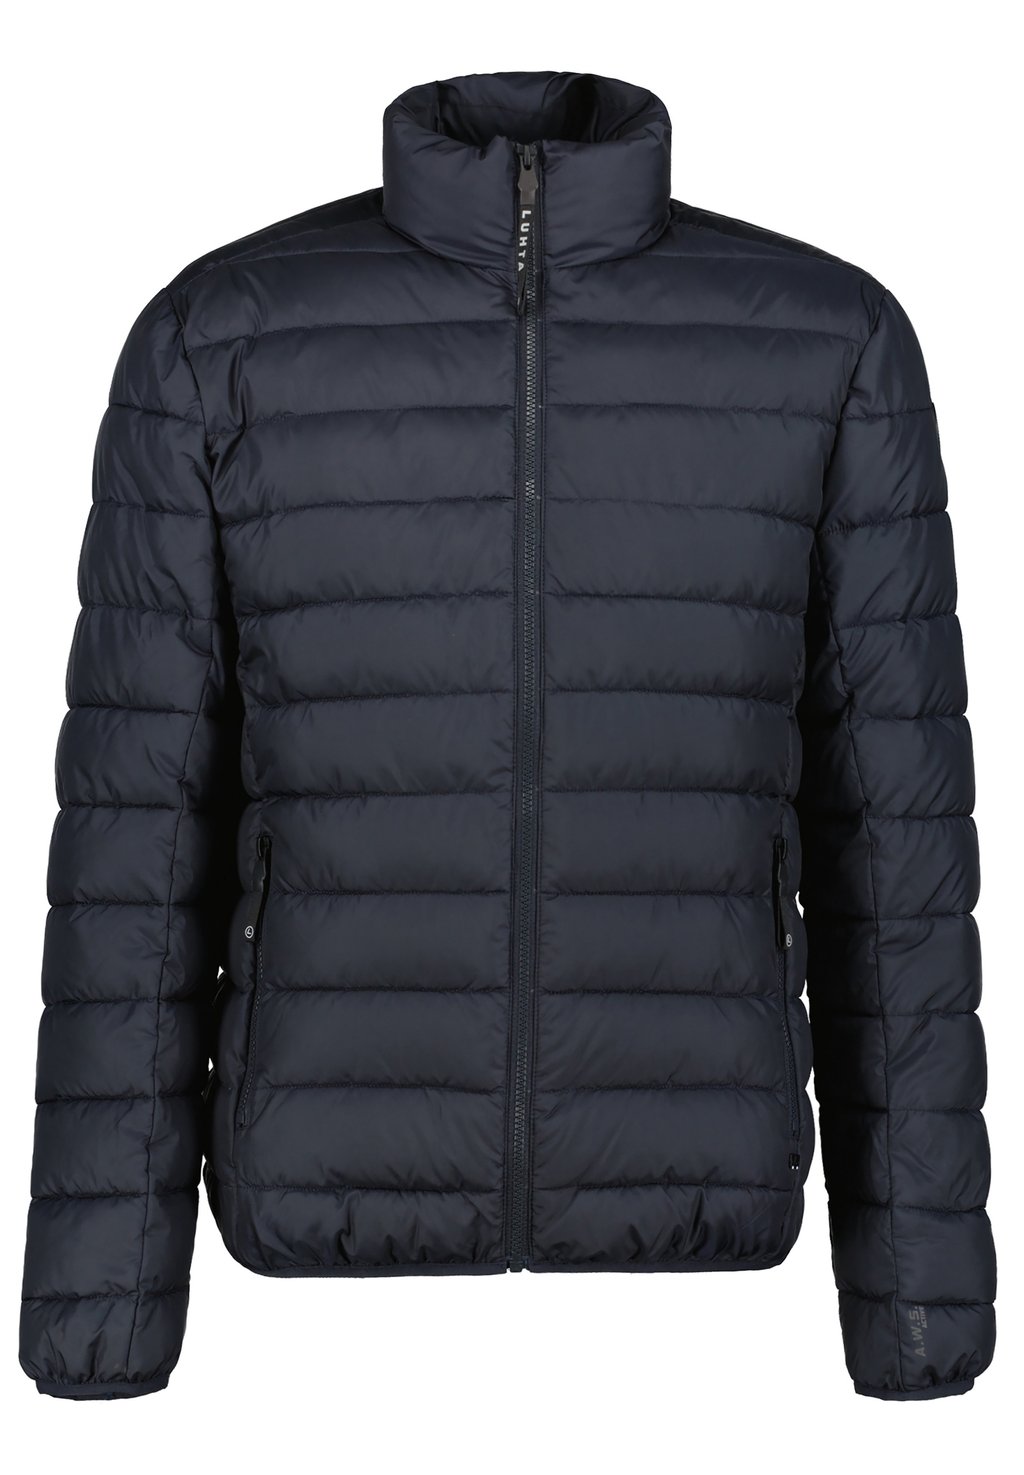 Зимняя куртка AROLAMPI Luhta, темно-синий зимняя куртка luhta